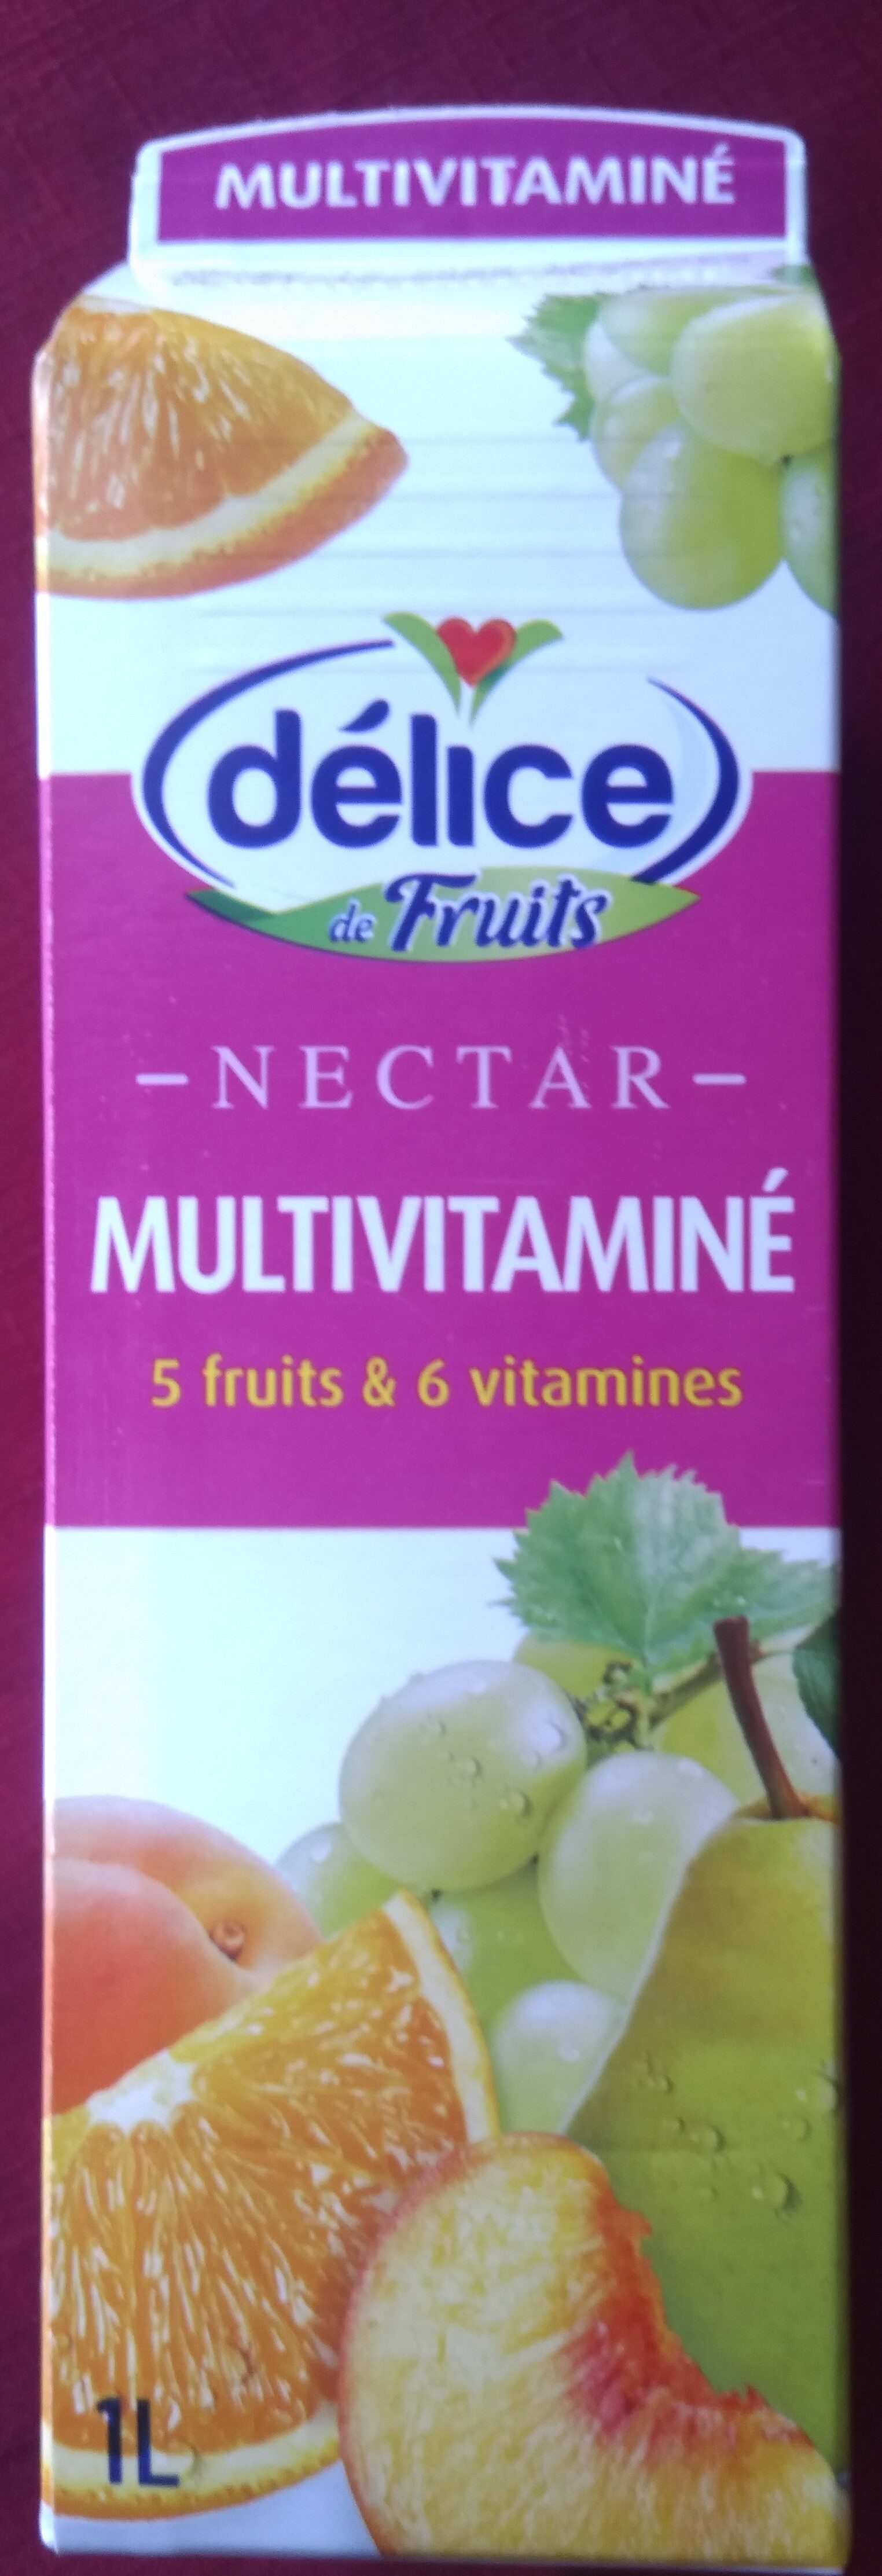 Nectar multivitaminé - Product - fr